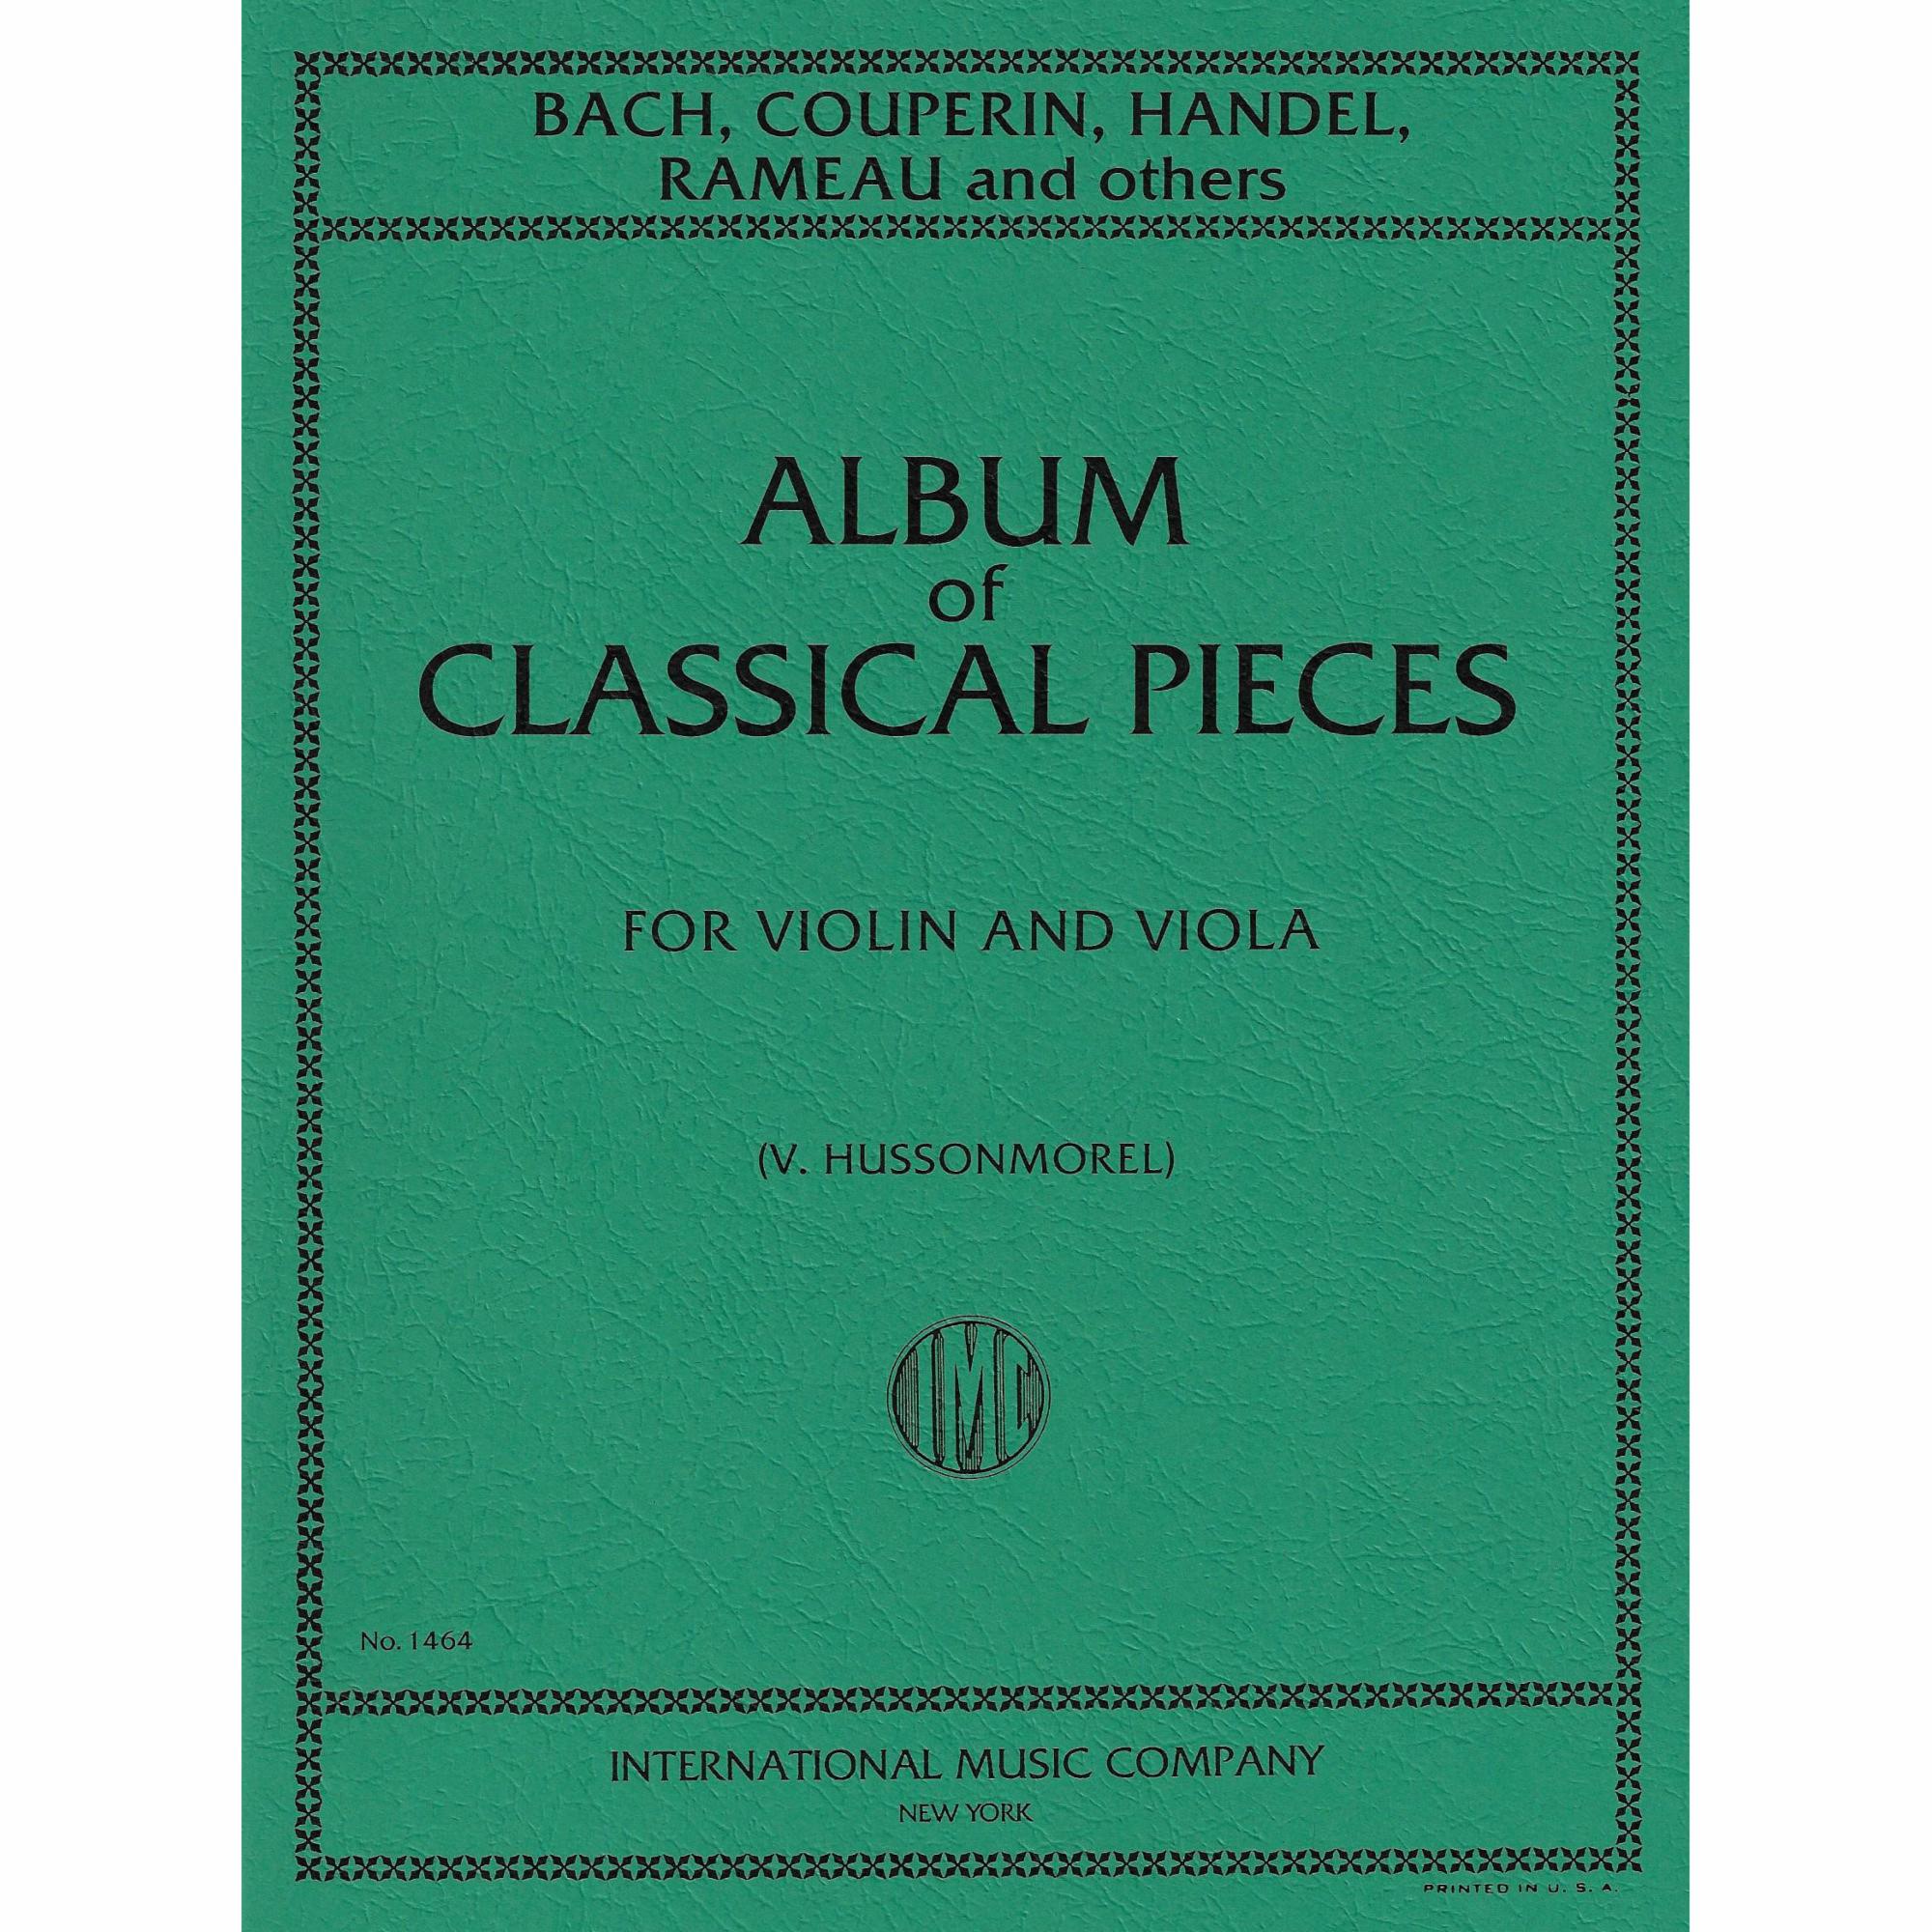 Album of Classical Pieces for Violin and Viola